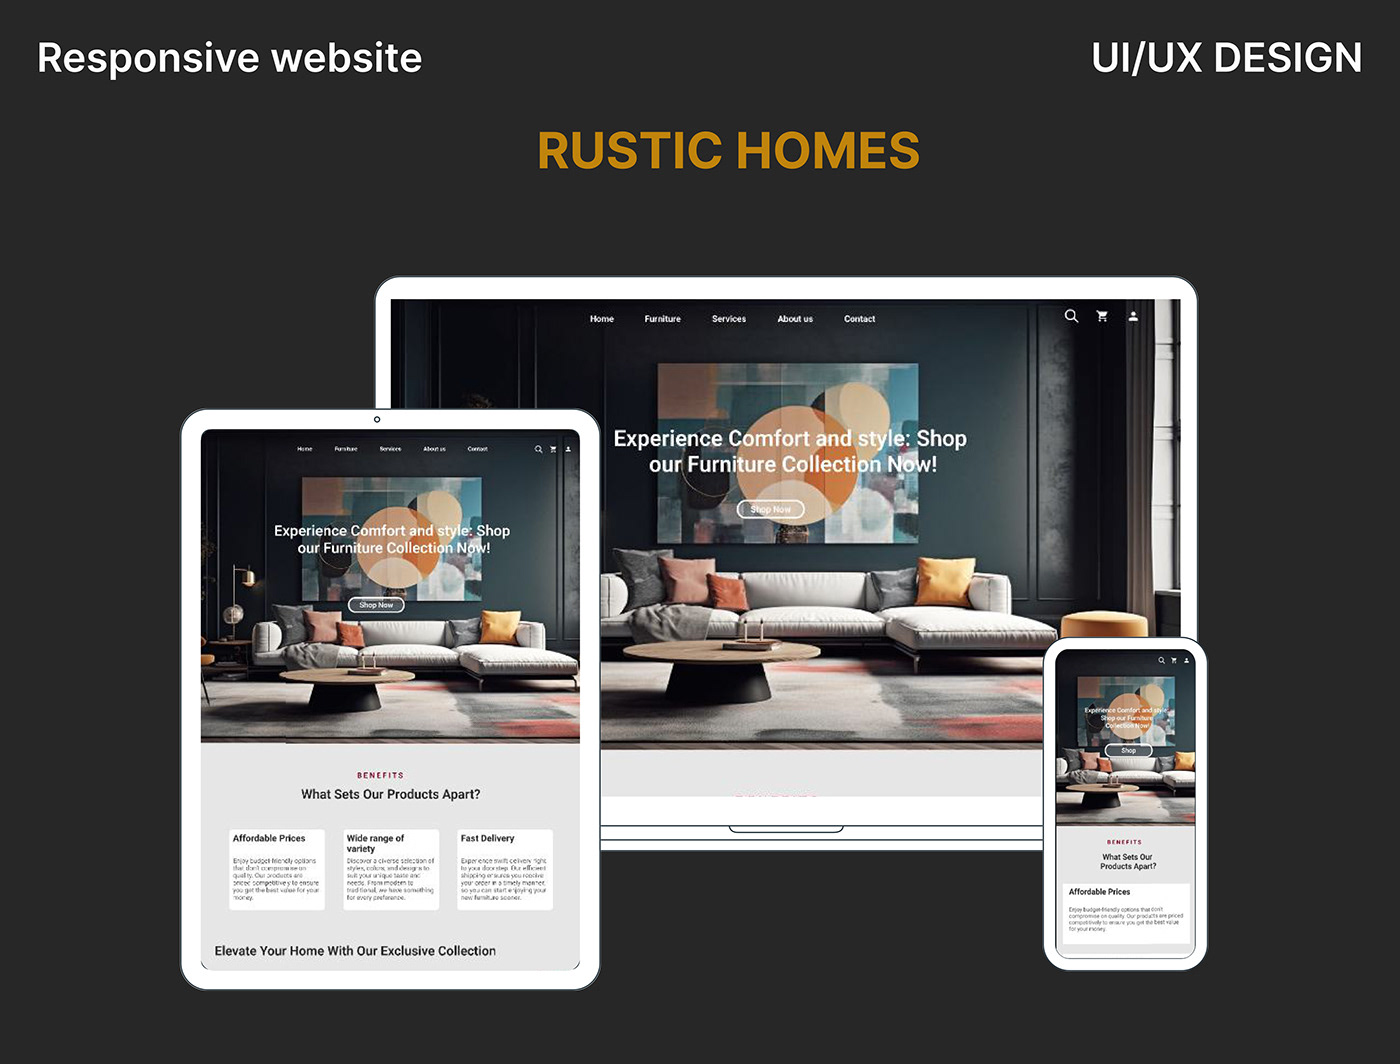 UI/UX ui design user interface responsive website Responsive Website user experience UX design Case Study Mobile app